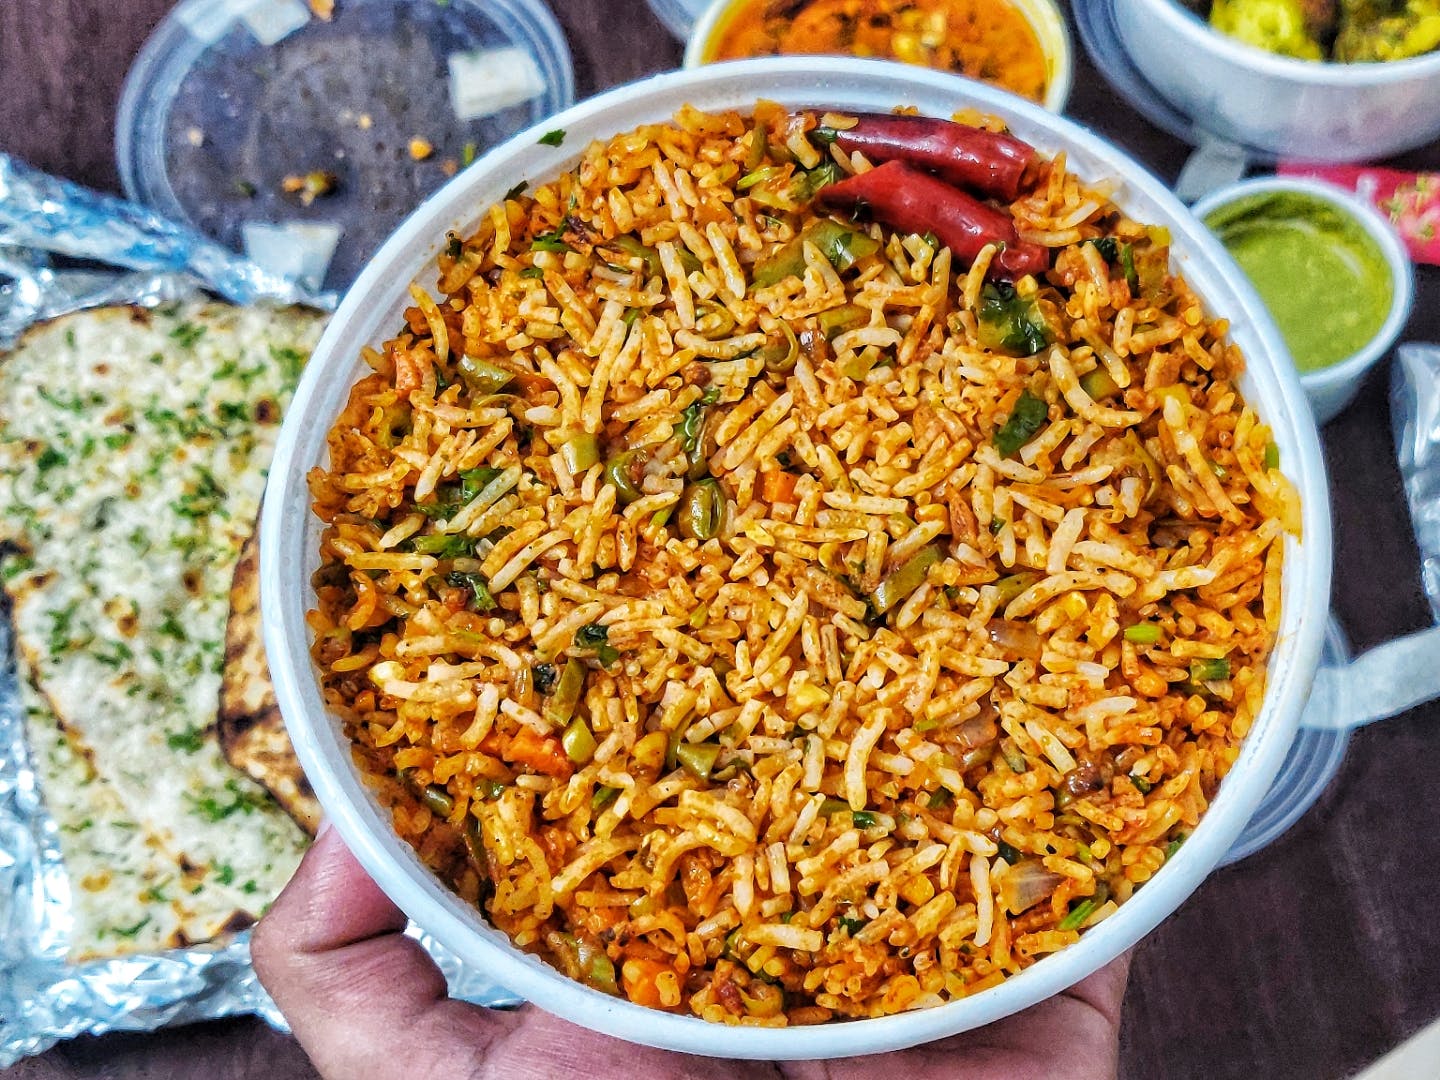 Cuisine,Spiced rice,Food,Dish,Puliyogare,Biryani,Hyderabadi biriyani,Jollof rice,Ingredient,Kabsa